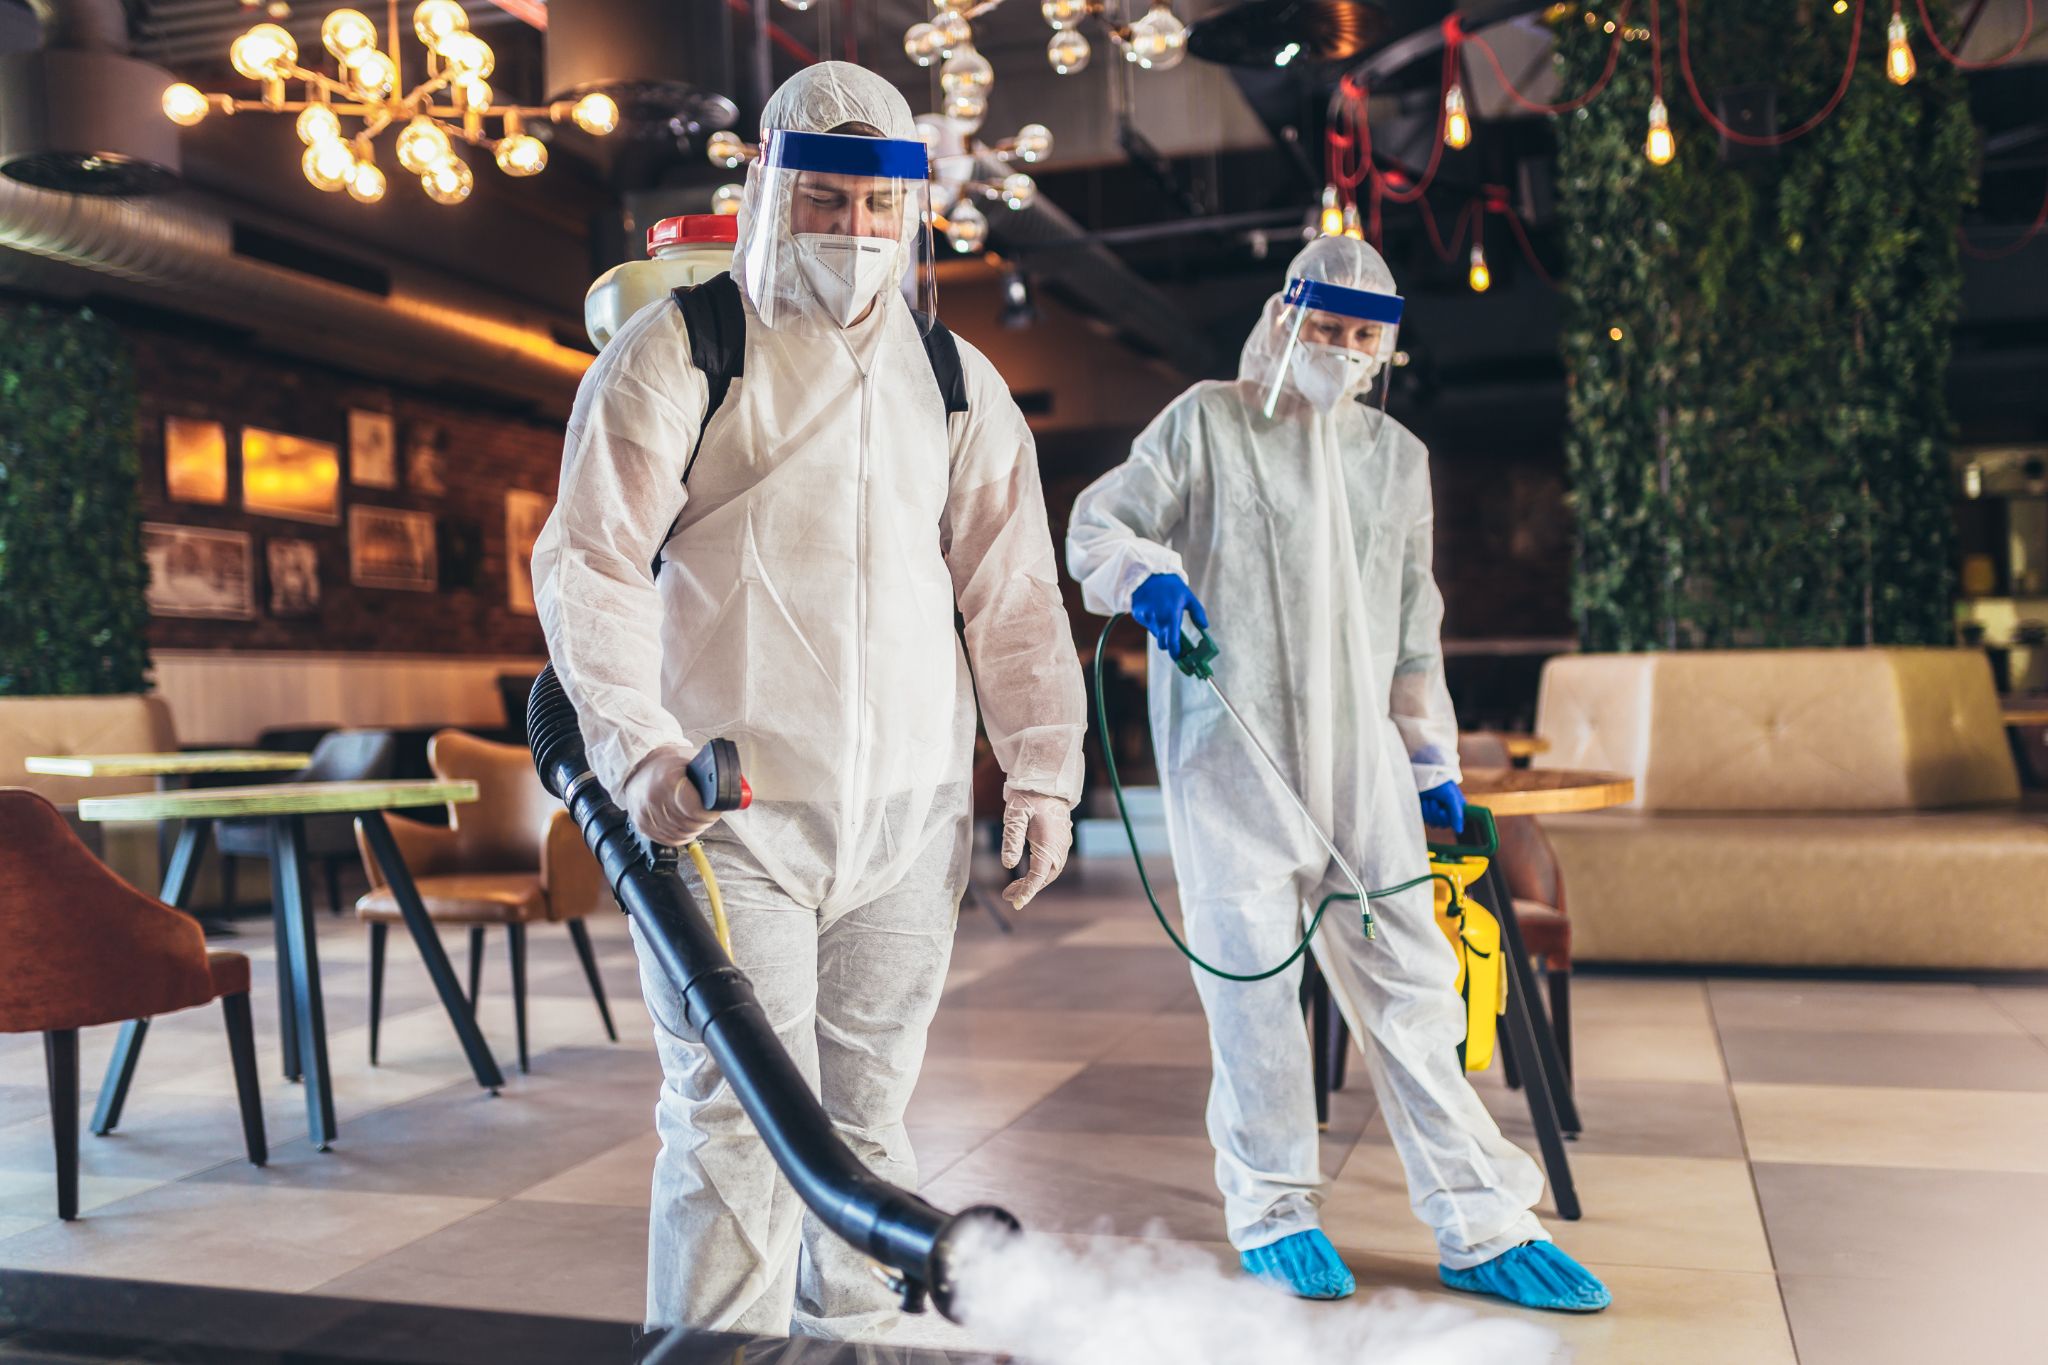 Professional workers in hazmat suits disinfecting indoor of cafe or restaurant